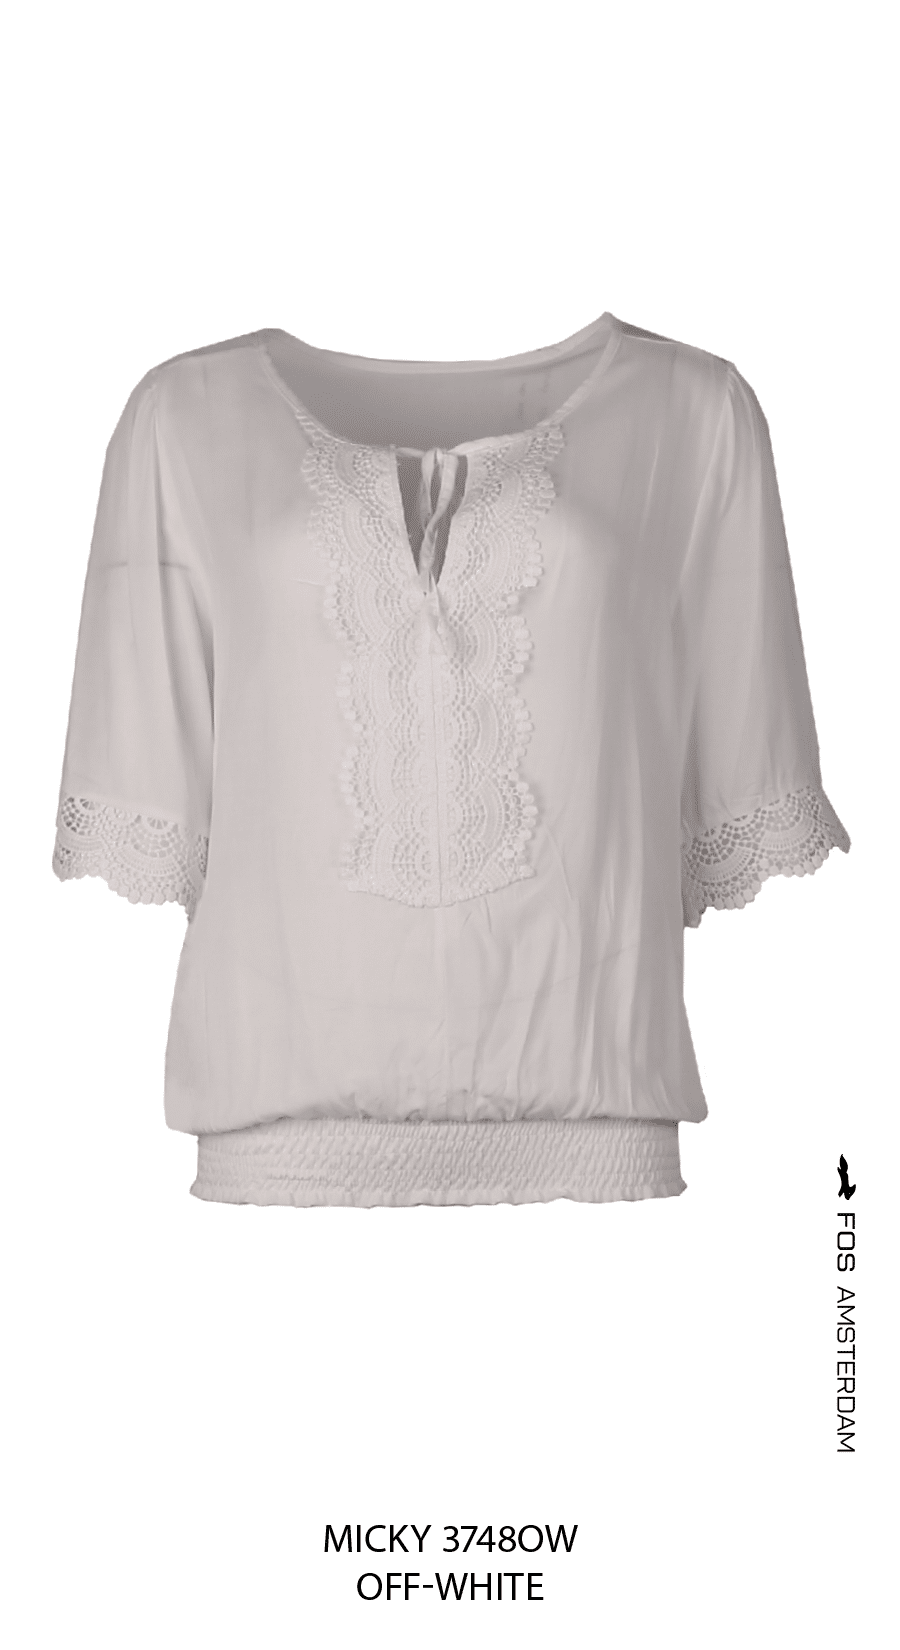 Voorschrijven Kikker bereiken Fos Fashion blouse Micky off white - It Rains Fashion